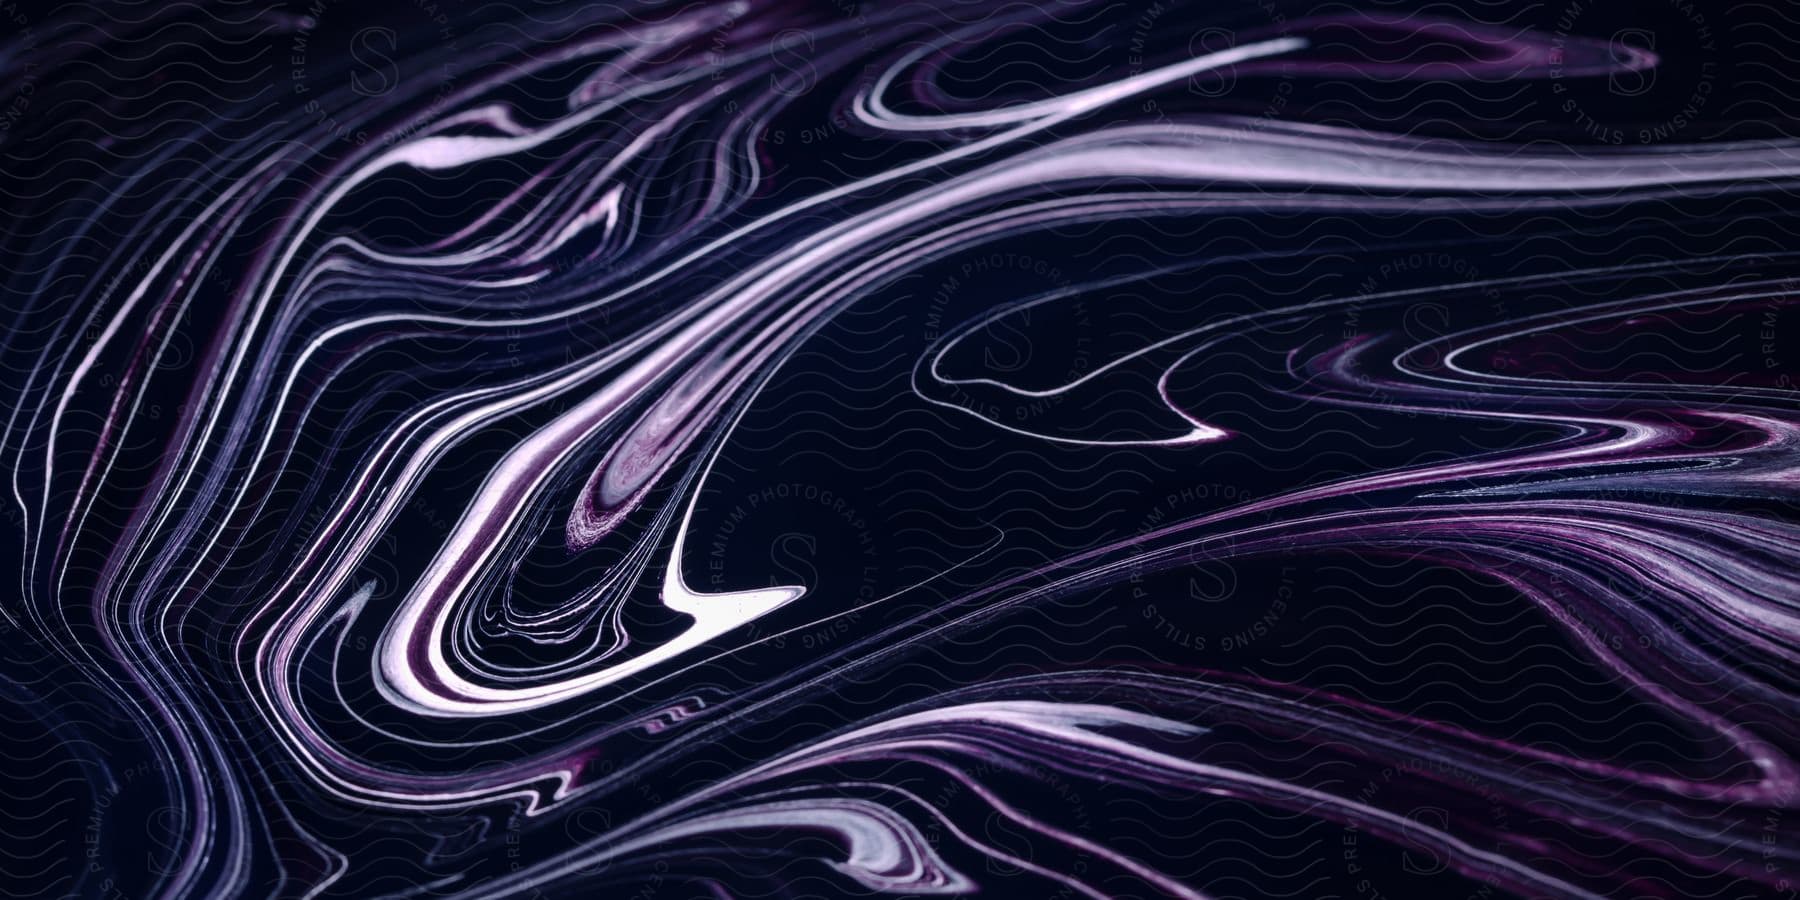 Flowing dark liquid reflecting blue and purple light.